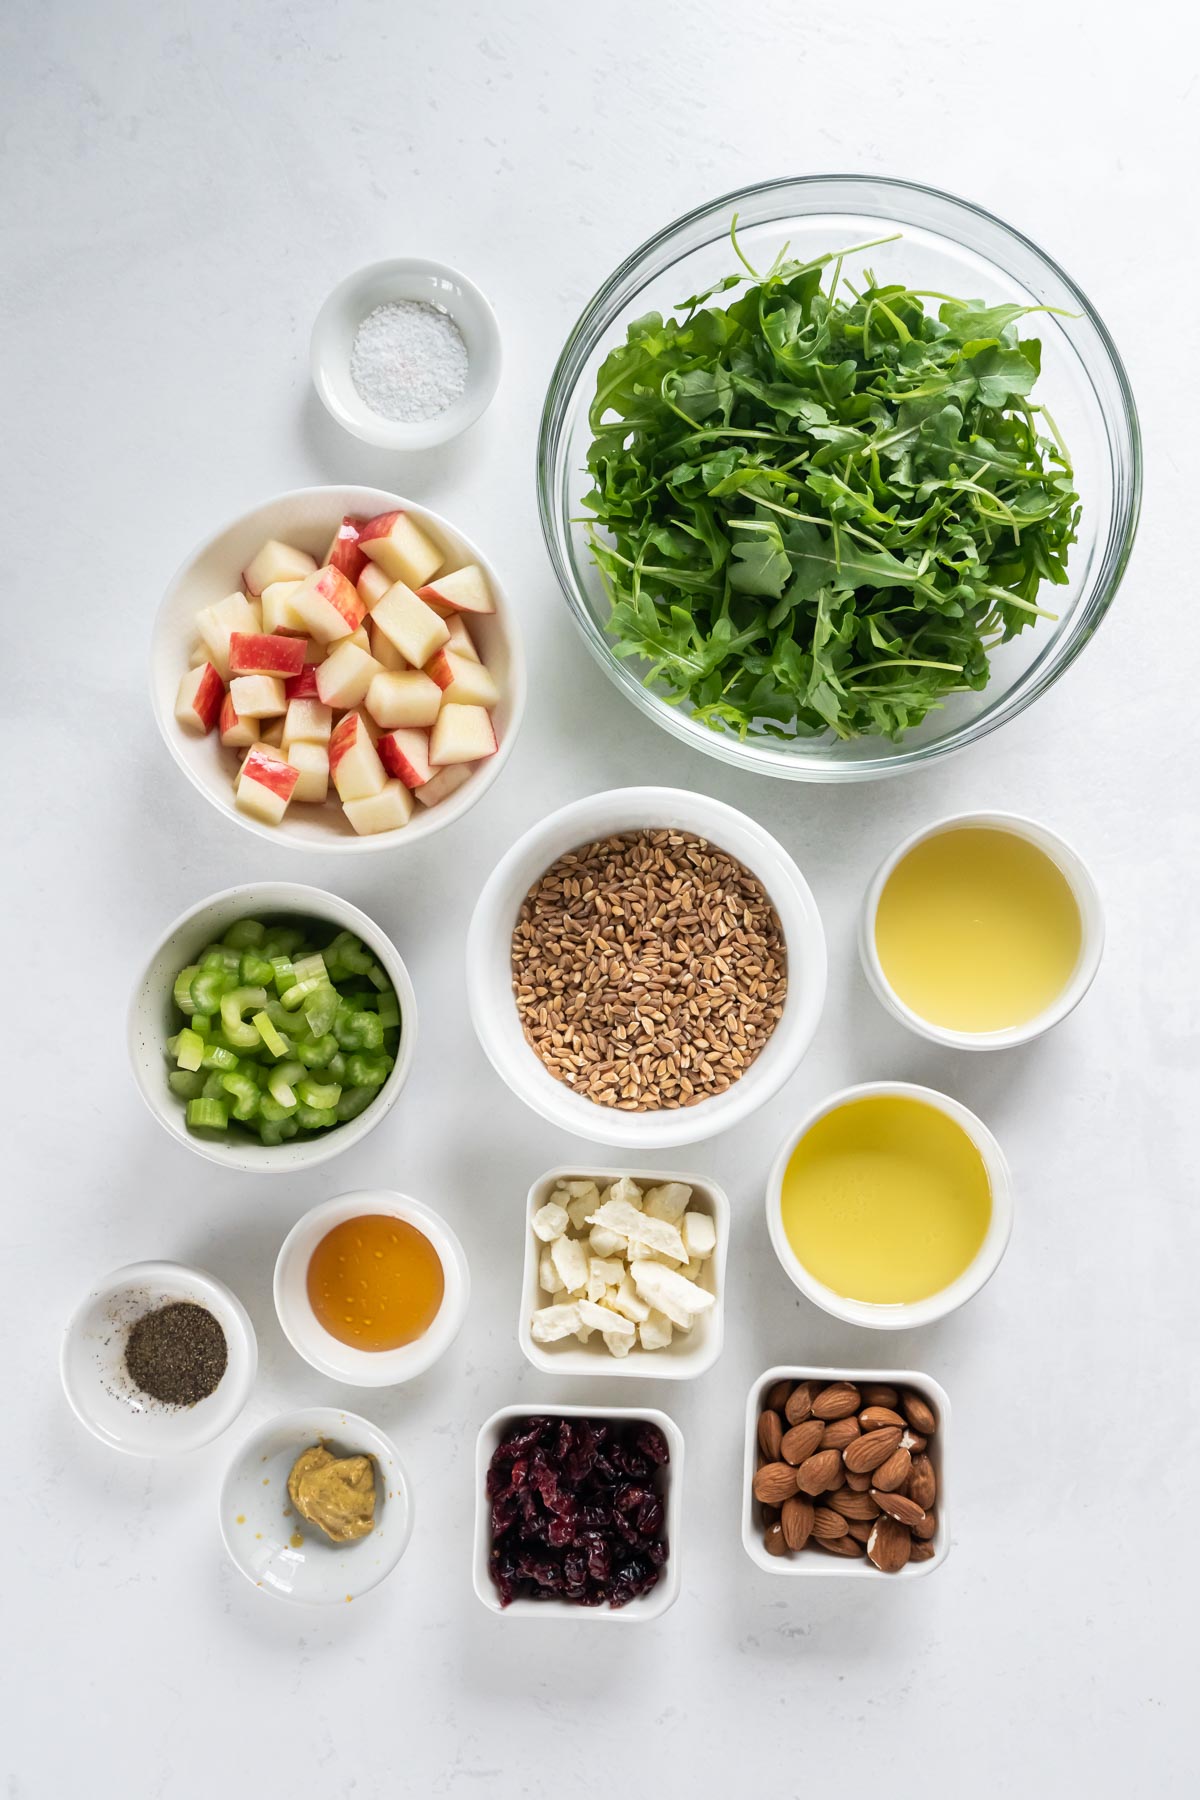 Ingredients for farro salad recipe.